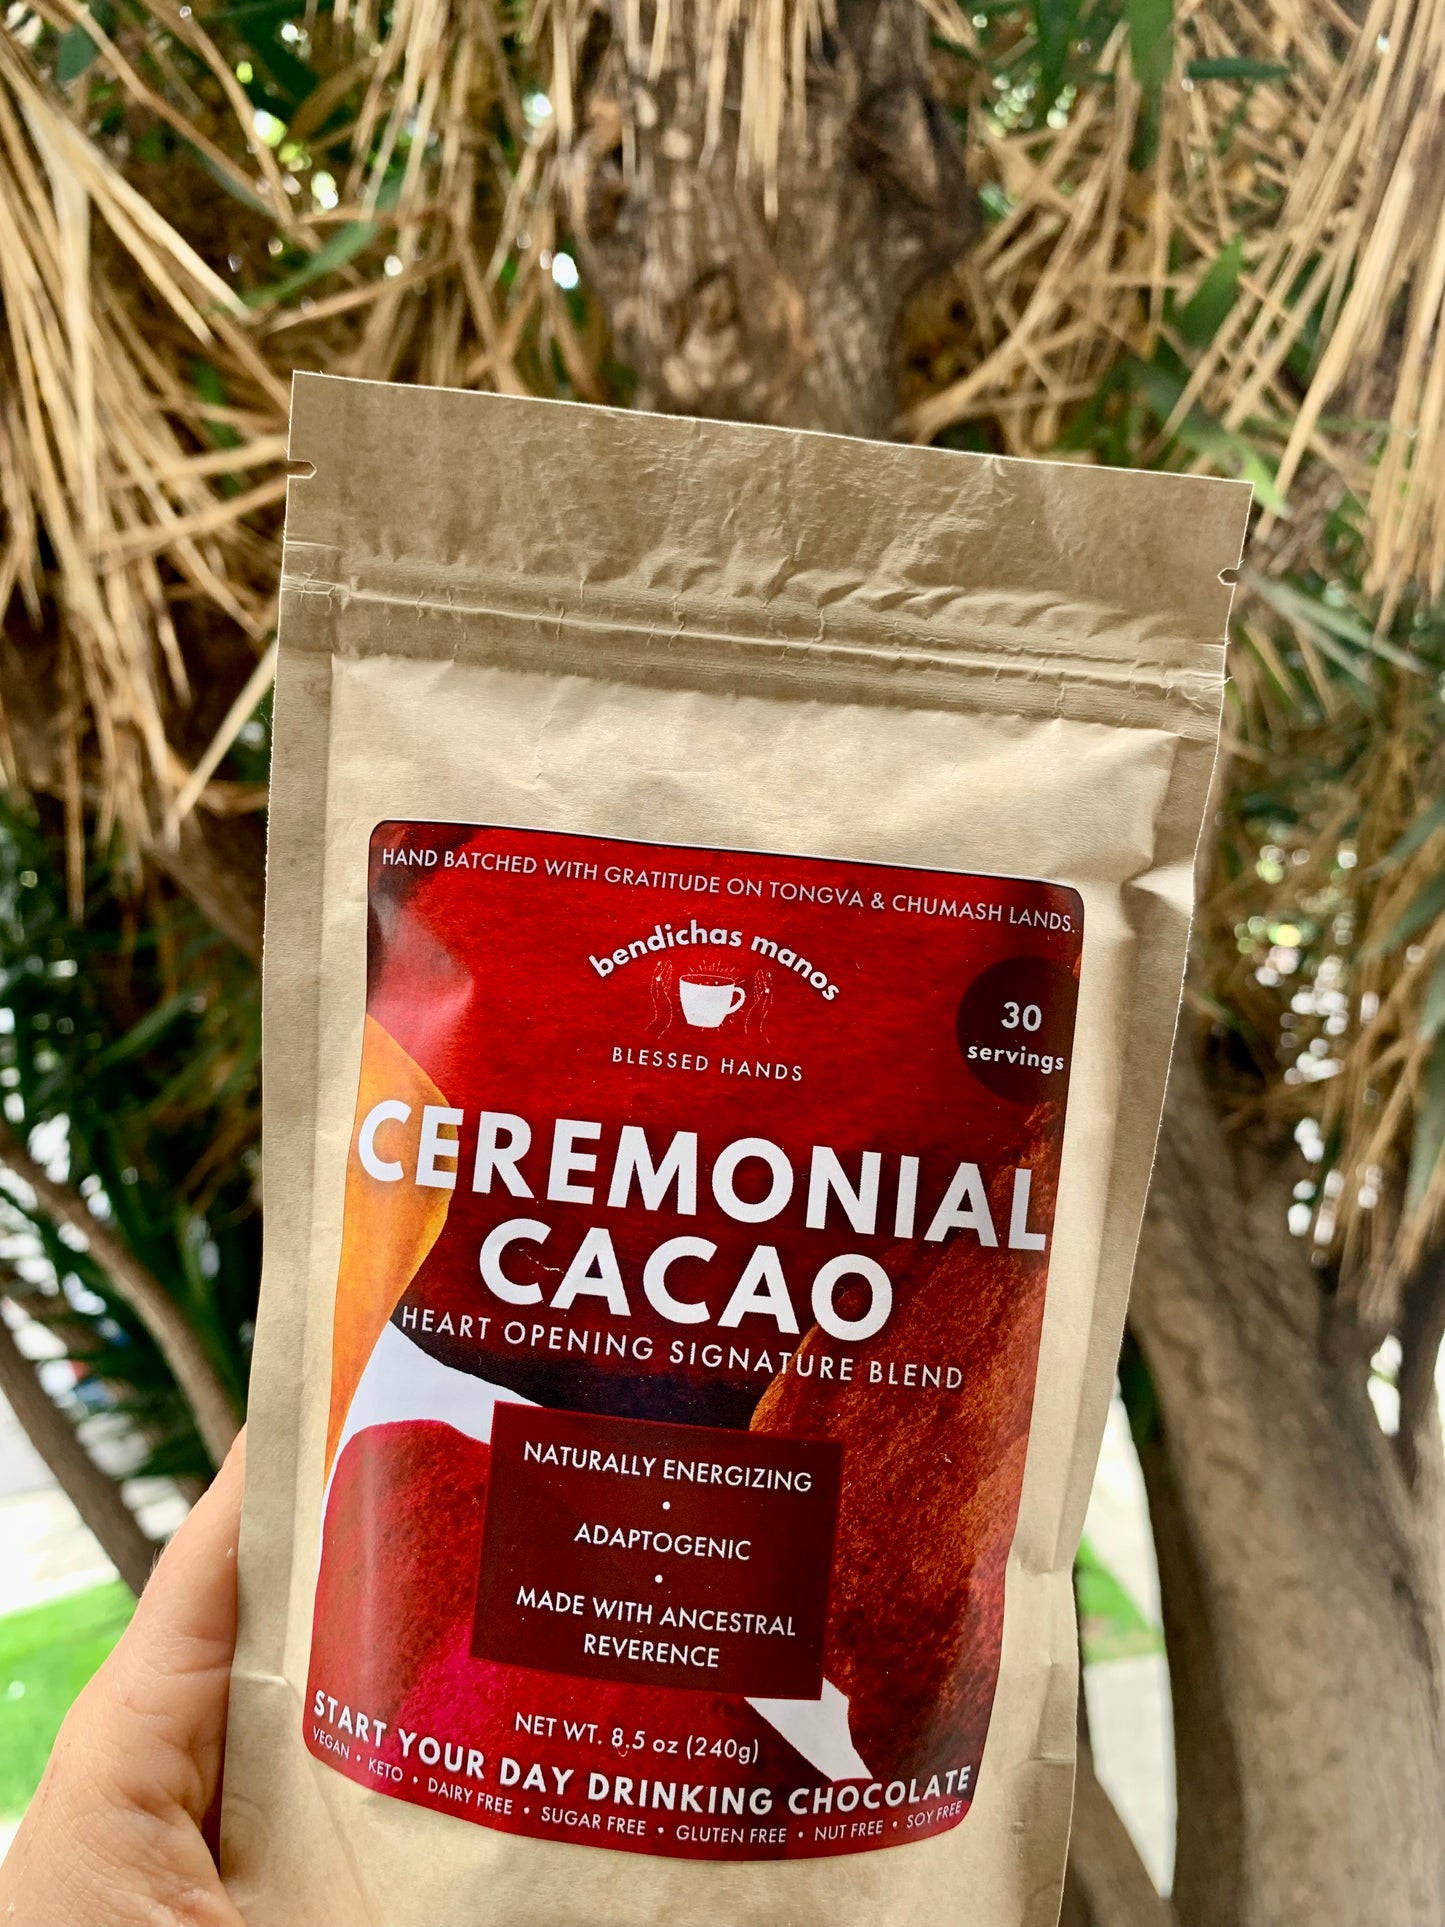 30 Serving Ceremonial Cacao Signature Blend